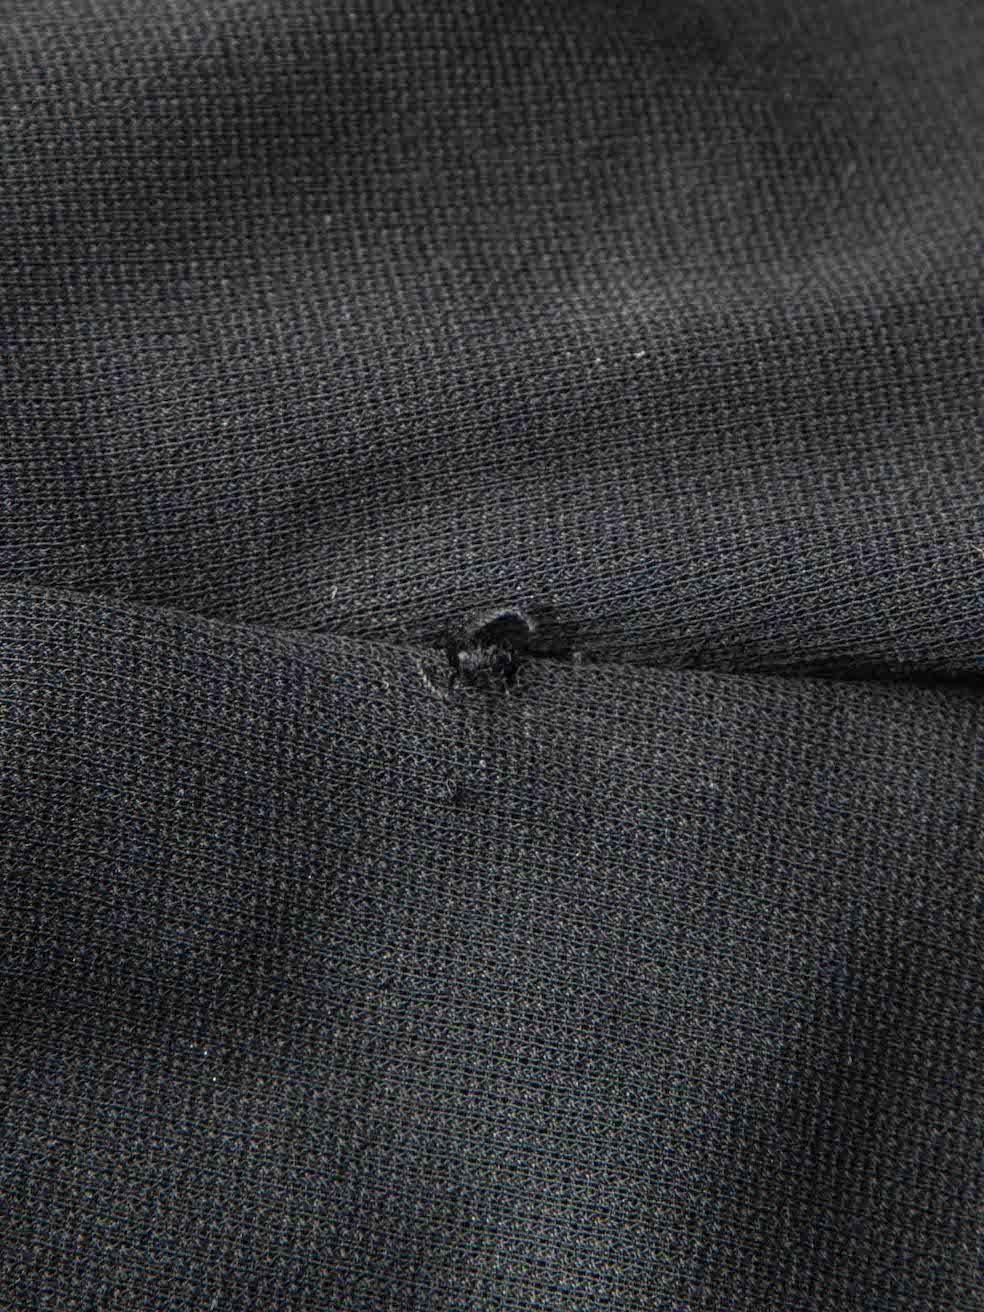 Black Sleeveless V-Neck Dress Size XS 1